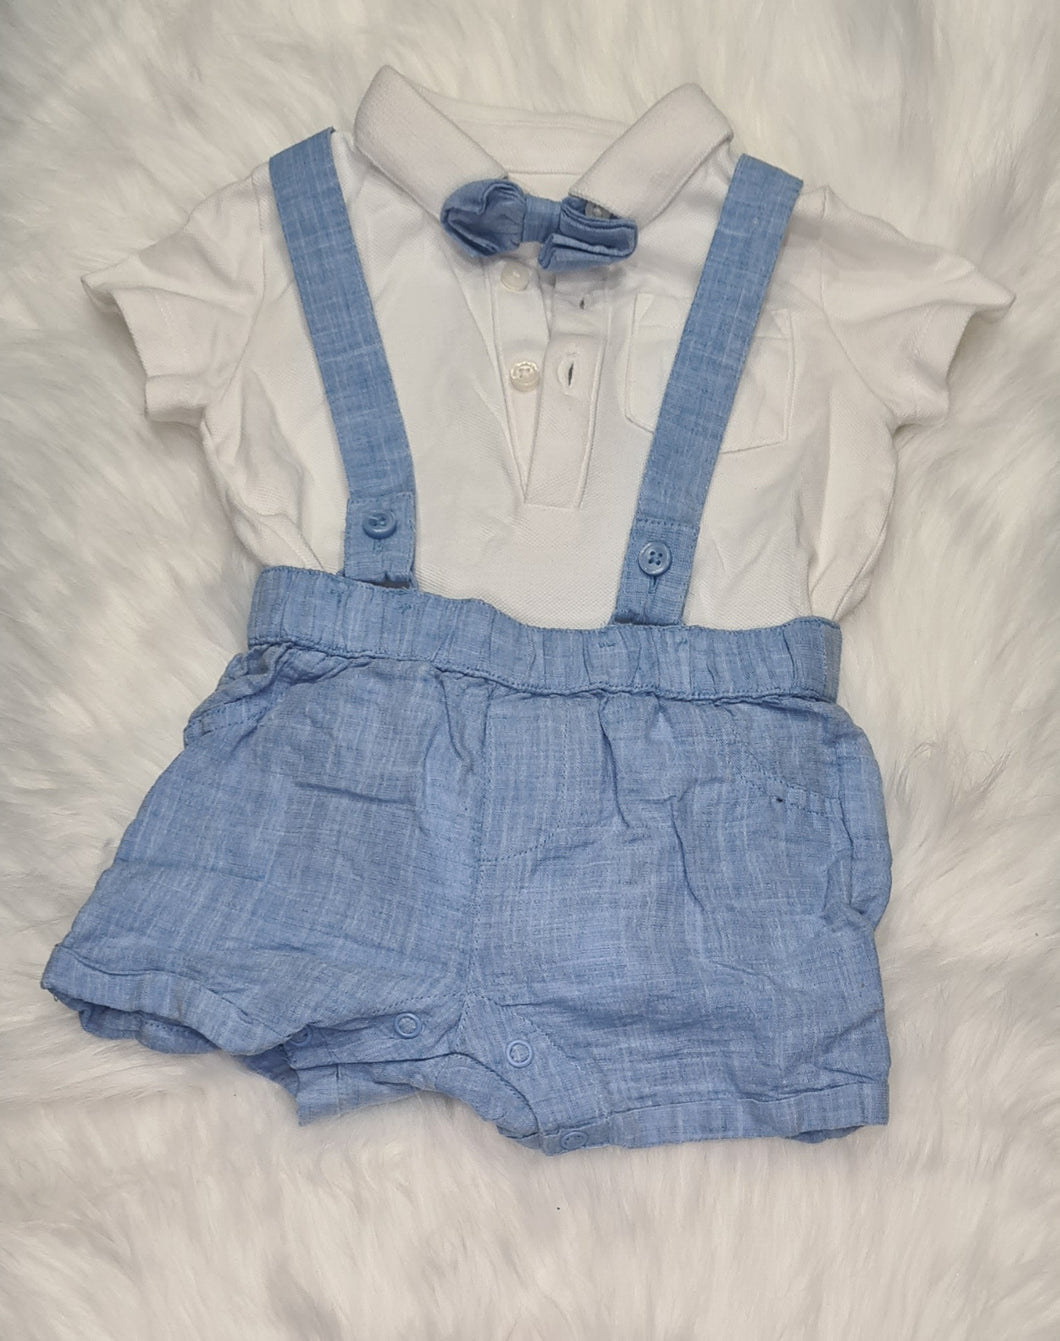 Boys 6-9 Months - Blue Bow and White Vest Romper Set